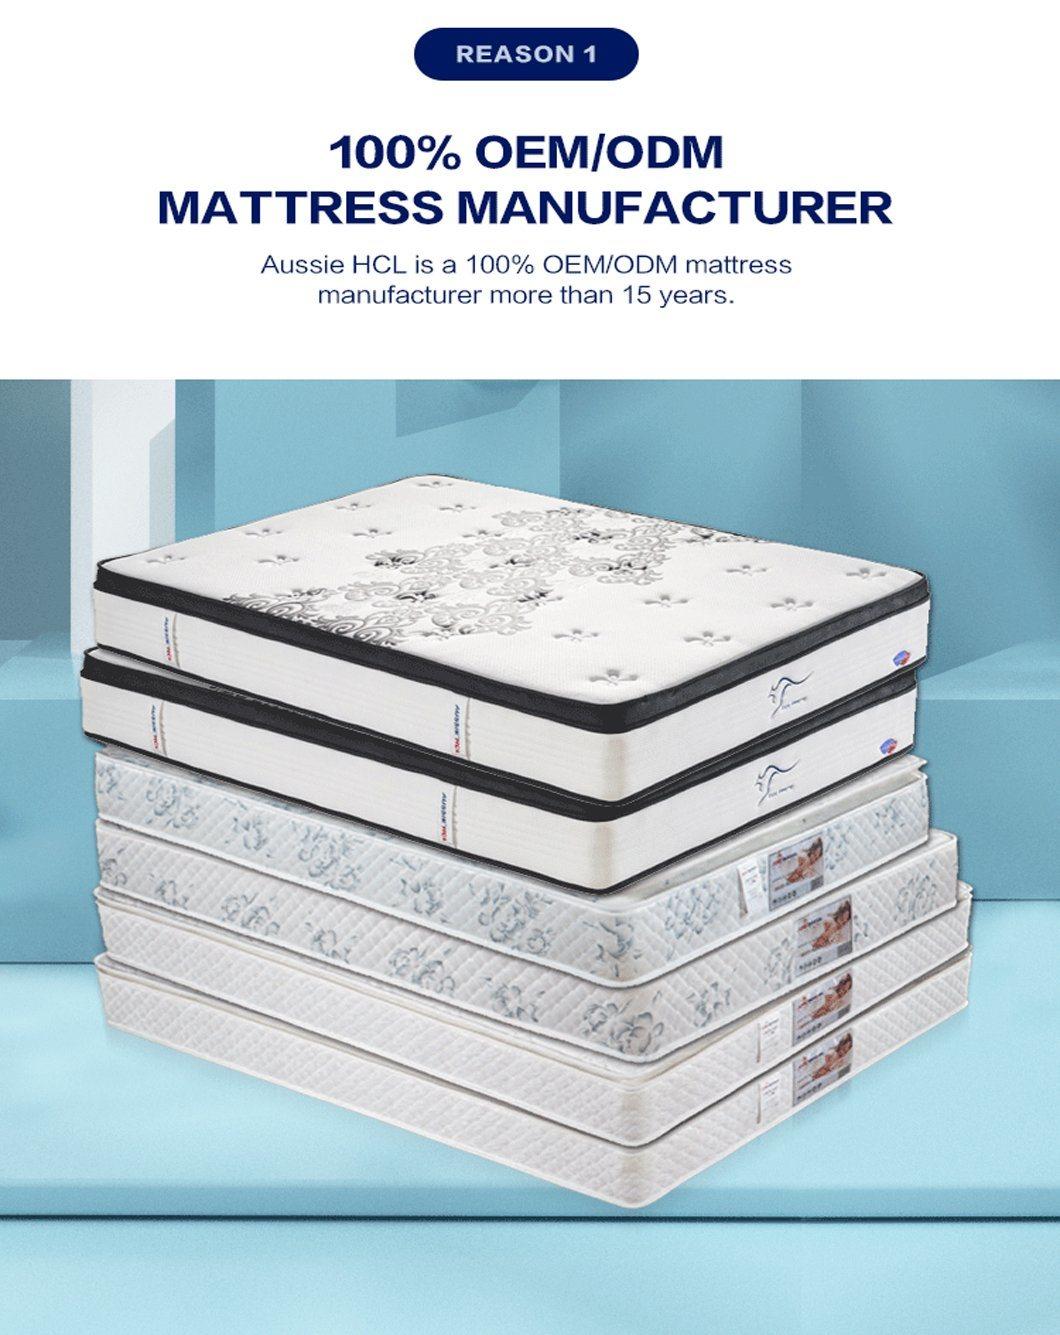 Aussie Sleeping Well The Best Factory Full Inch Mattresses King Double Gel Memory Foam Spring Mattress in a Box